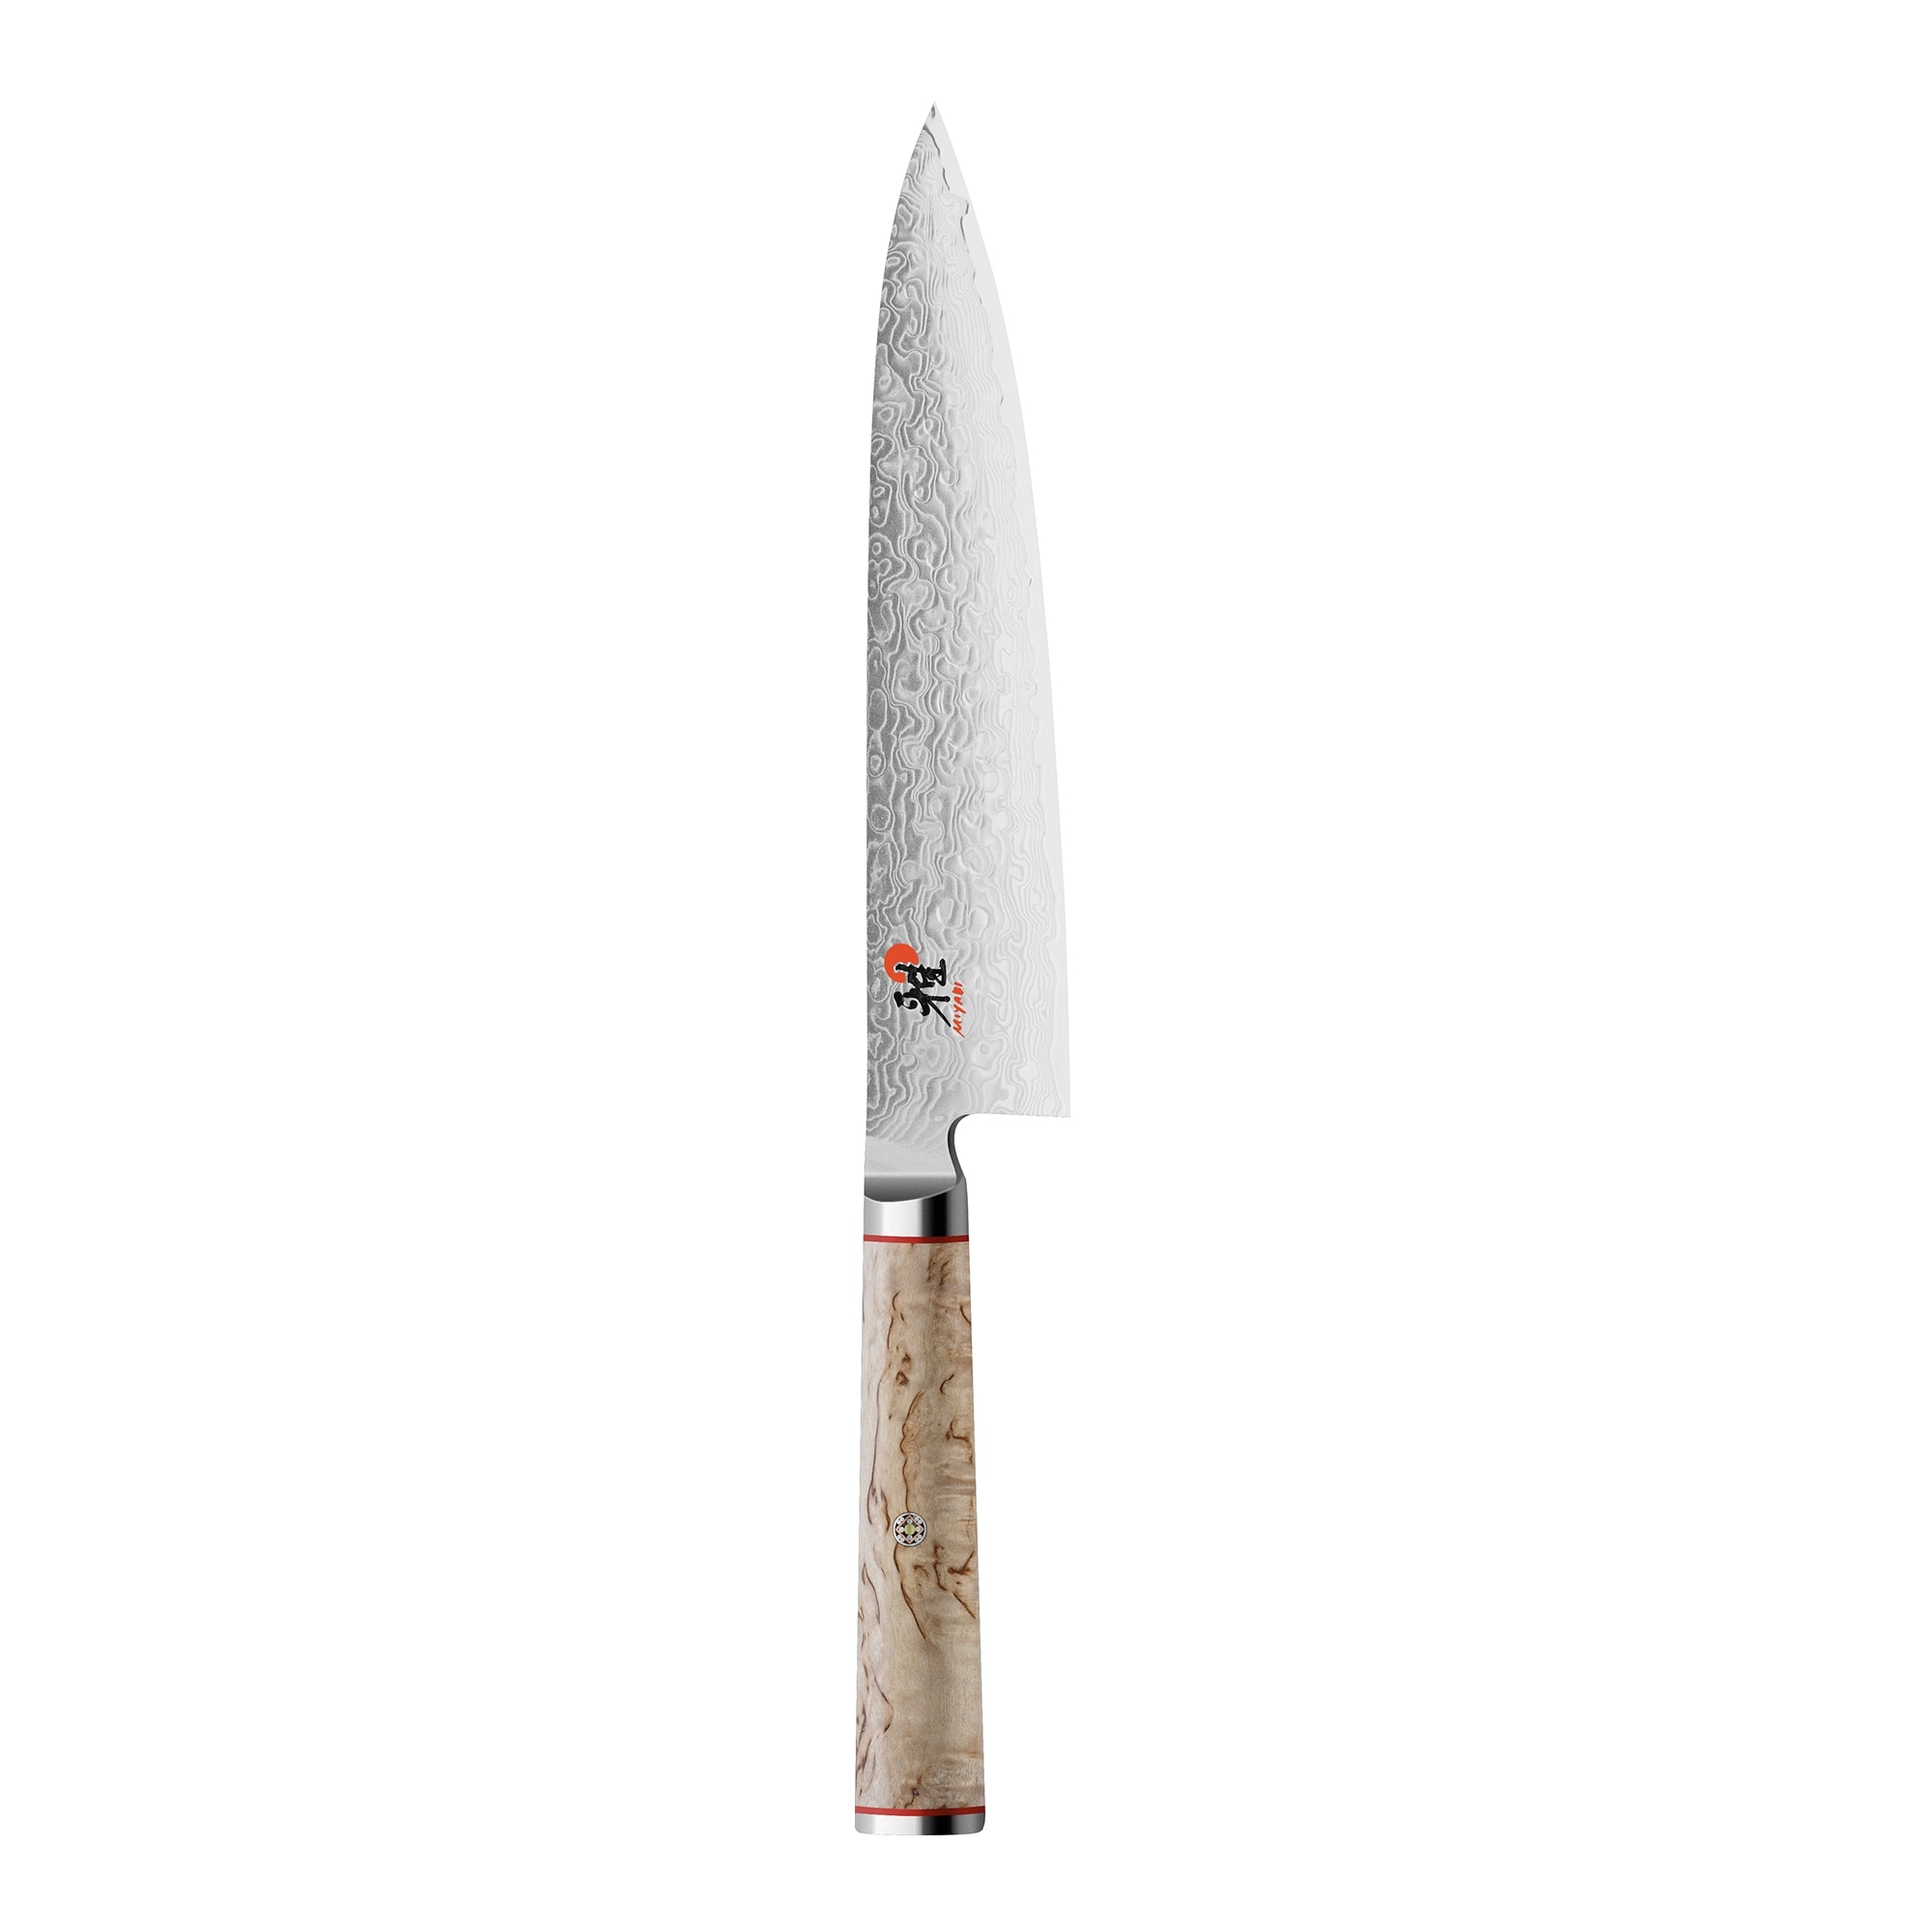 Birch Wood Knife Handle, 90-Day Guarantee